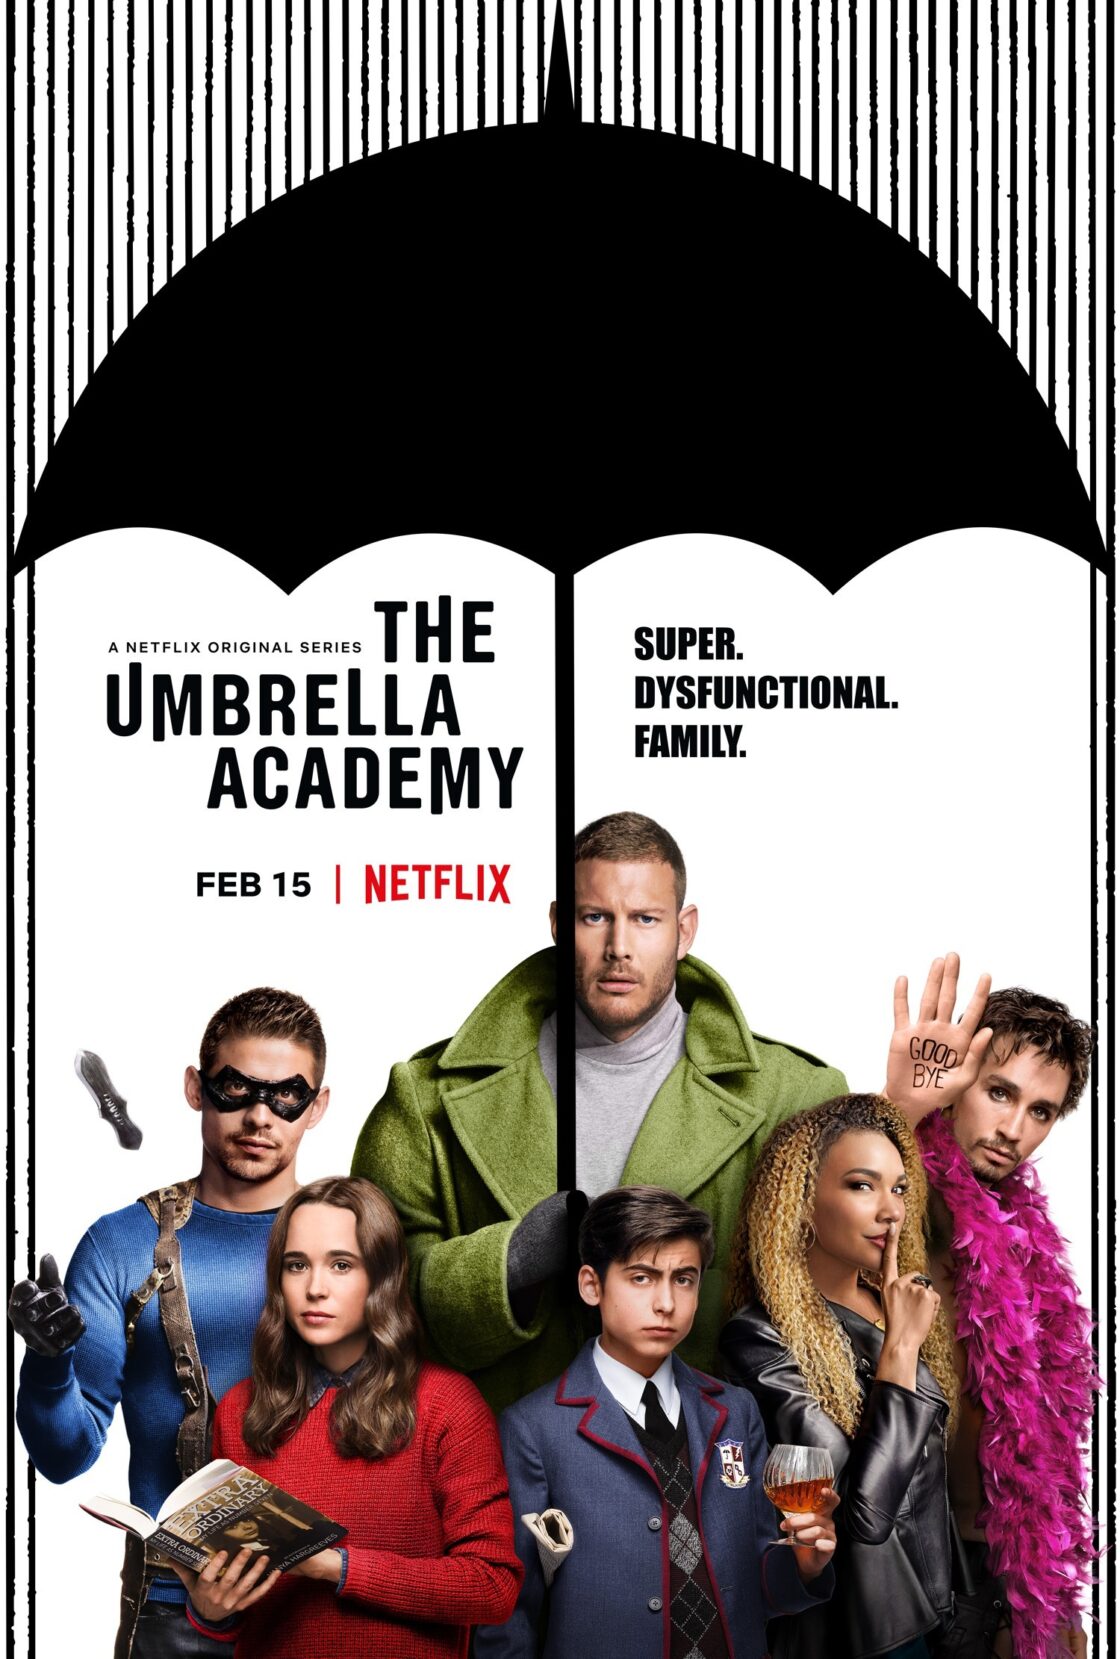 The Umbrella Academy, PopViewers